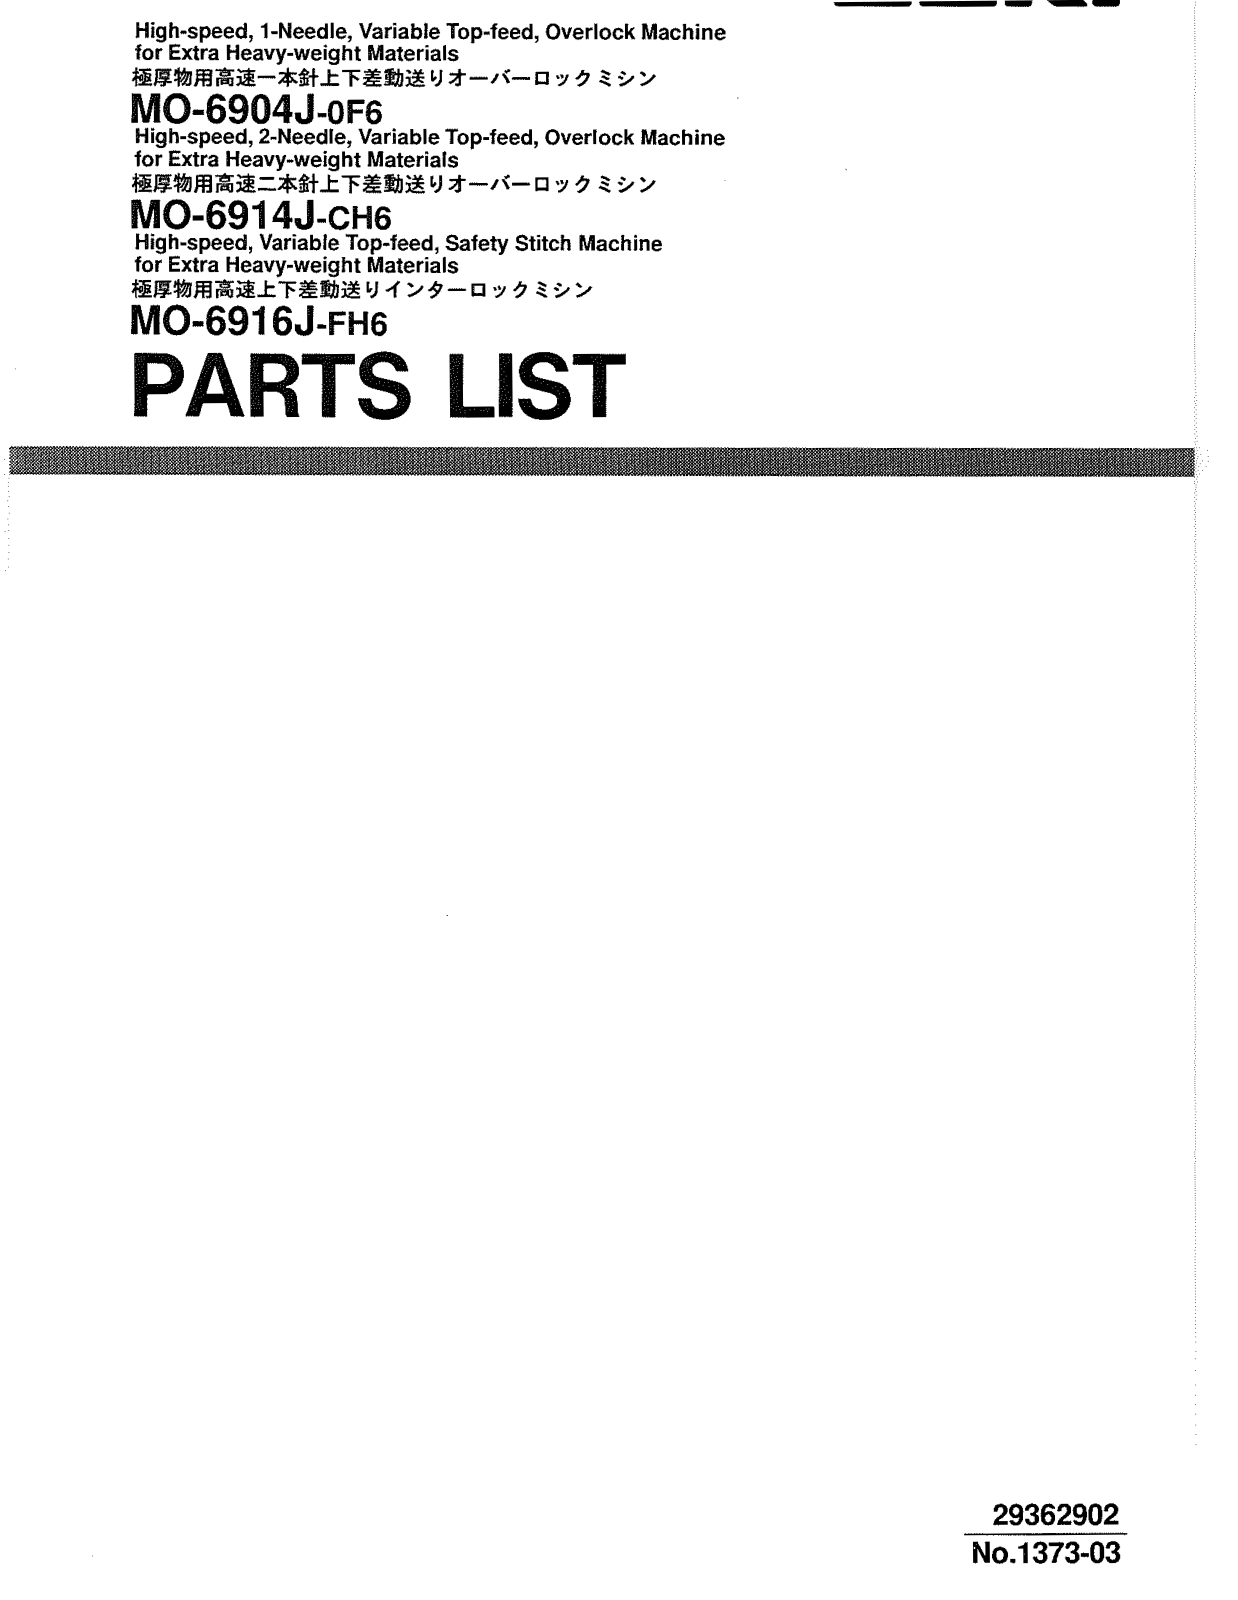 Juki MO-6904J-OF6, MO-6914J-CH6, MO-6916J-FH6 Parts List